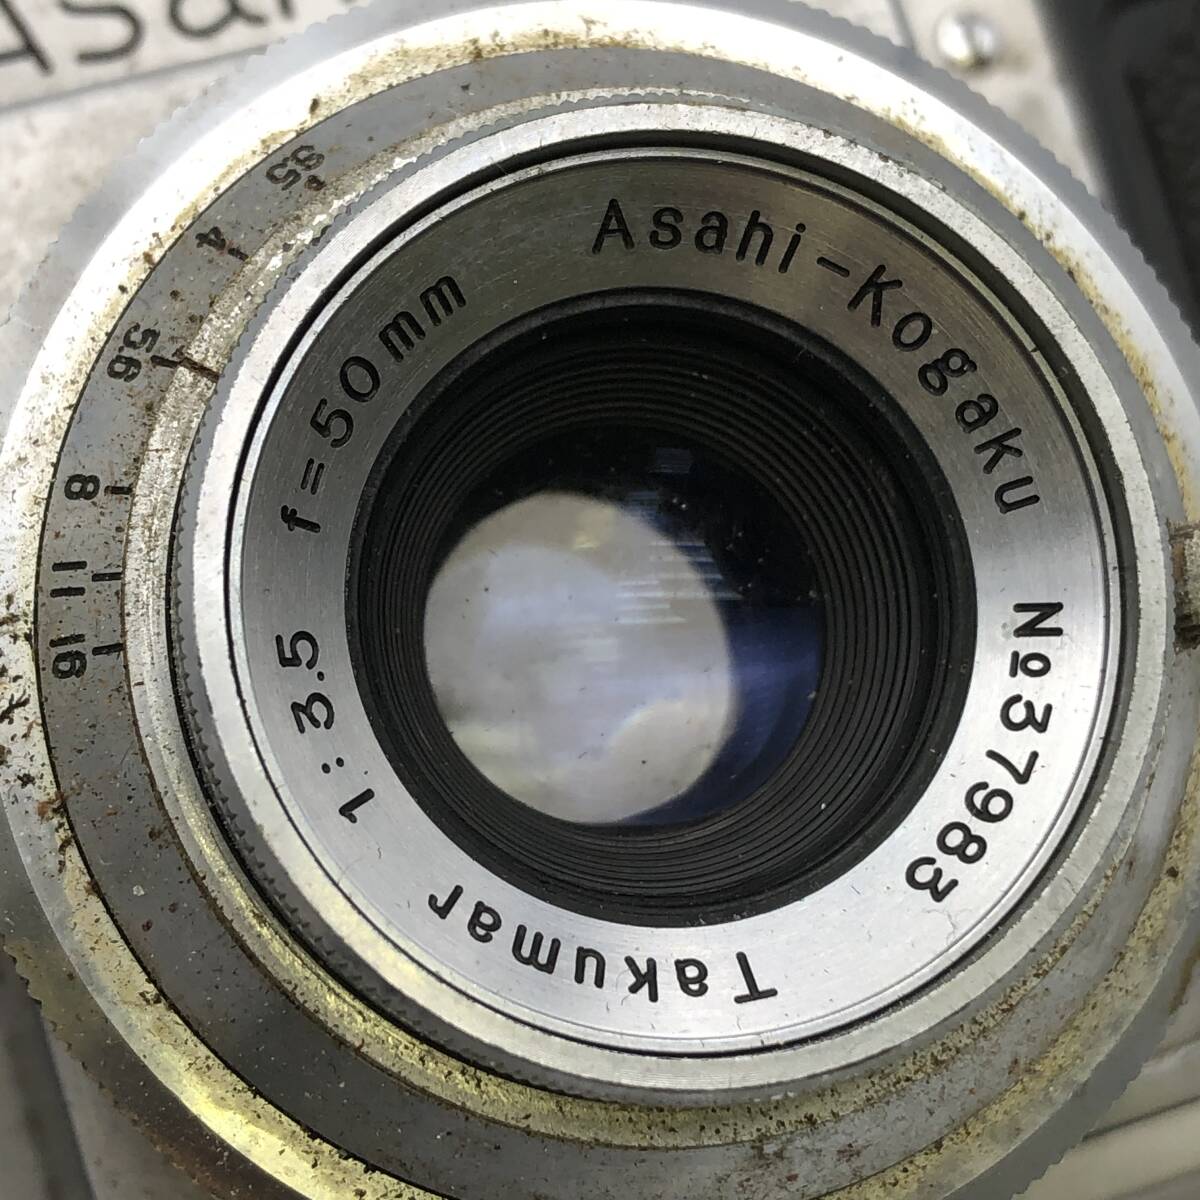 0503-1M☆ Asahiflex Takumar 50mm F3.5 レンズセット 動作未確認 現状品 No.34832 ヴィンテージ 雰囲気系 ジャンクの画像6